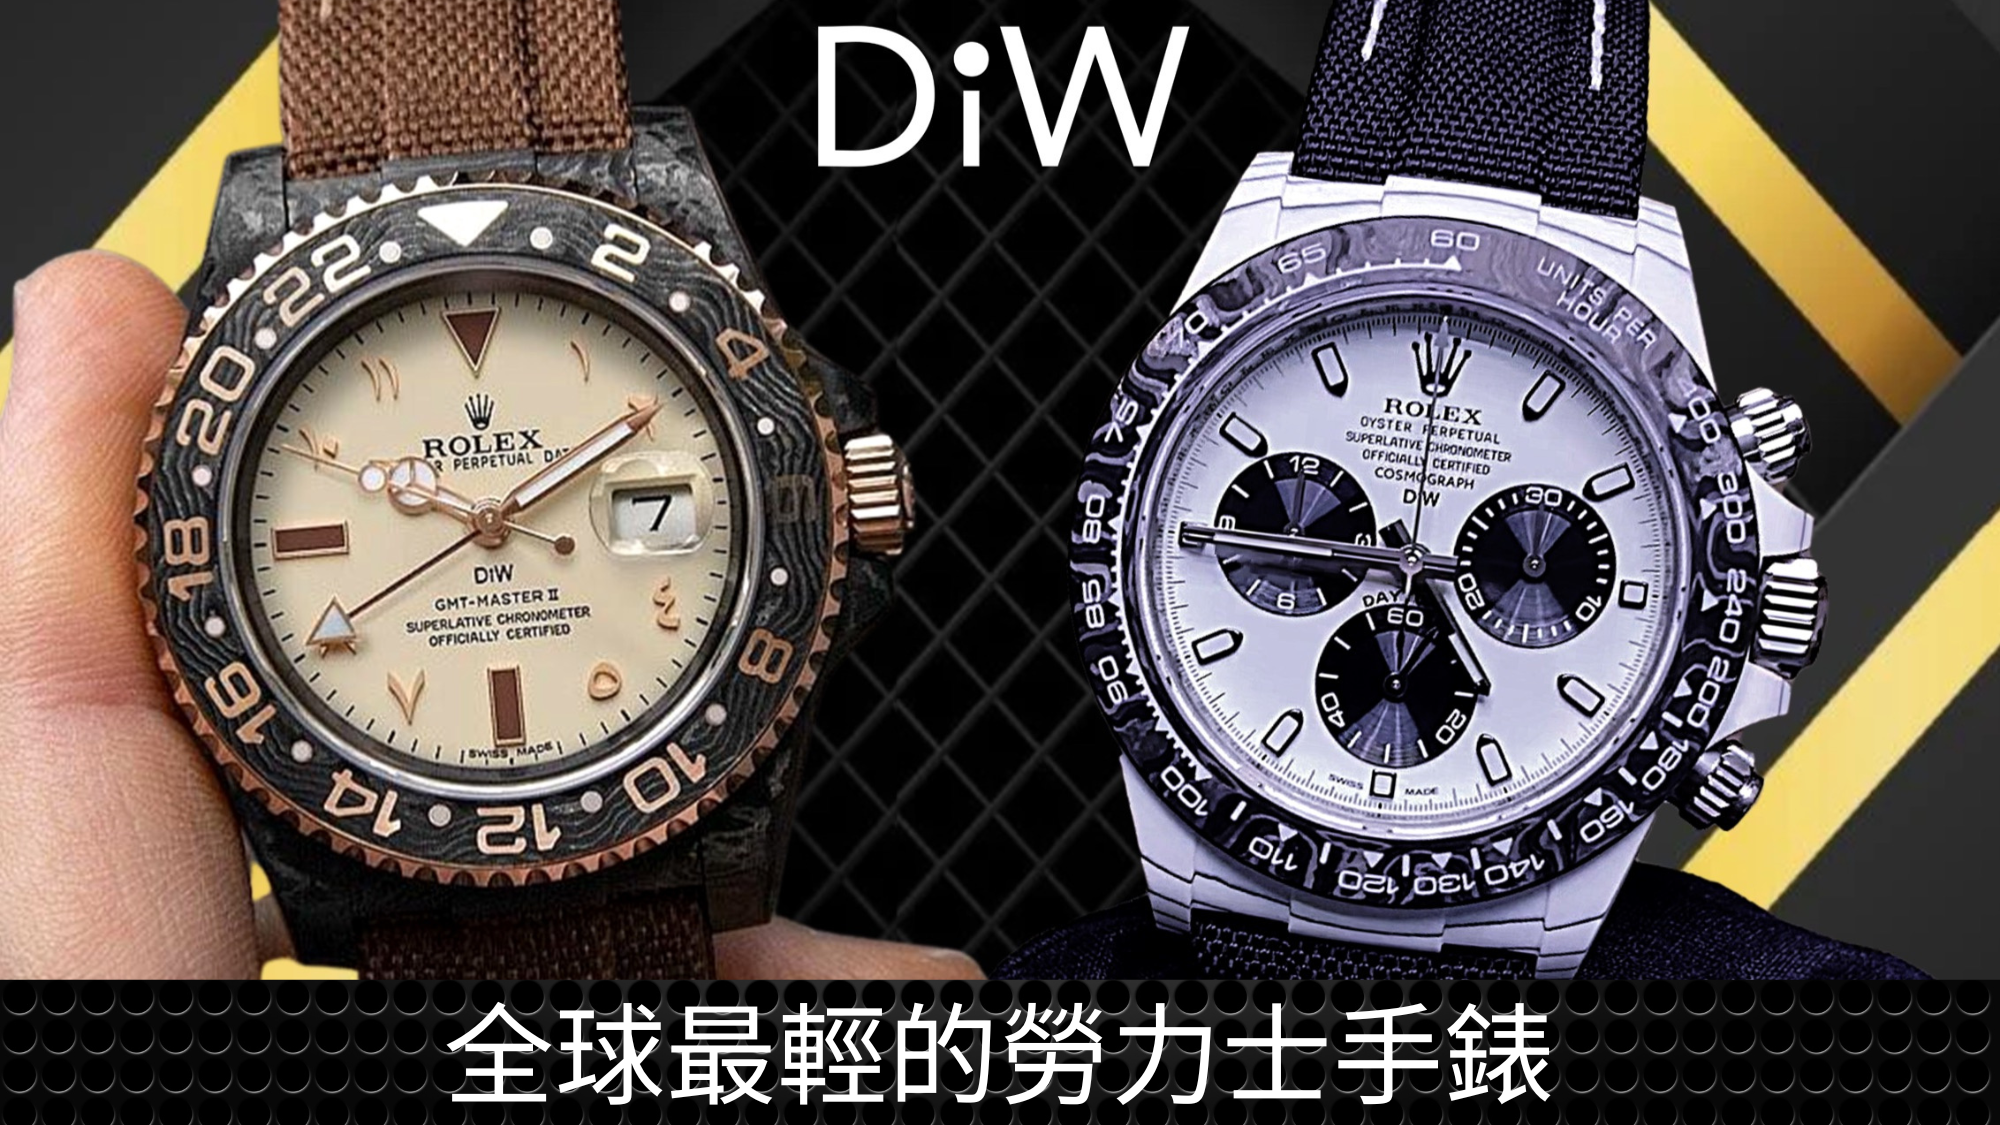 Load video: Rolex DiW Showreel | Patek Philippe DiW Showreel | DiW 勞力士 作品集視訊 | DiW 百達翡麗 作品集視訊 | WORLDTIMER